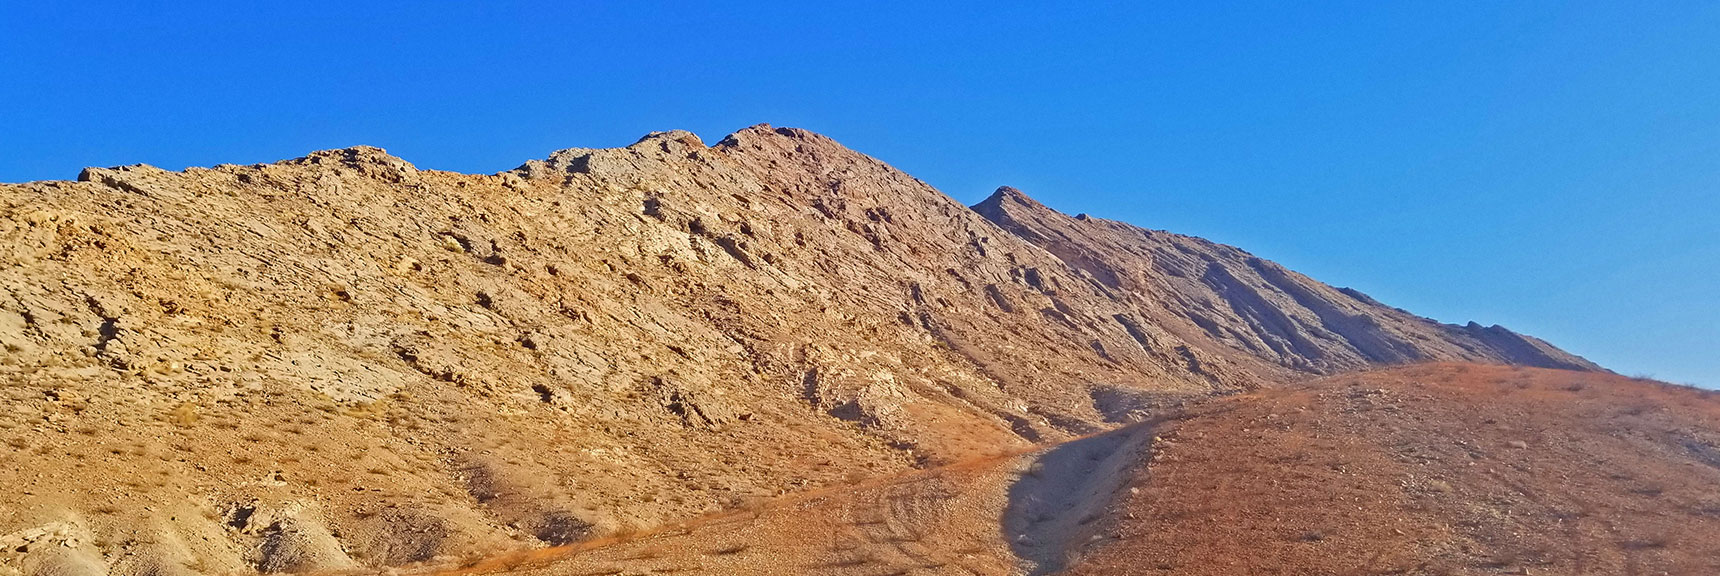 East Side of Sunrise Mt. Potential Summit Approach Toward Left. | Sunrise Mountain, Las Vegas, Nevada